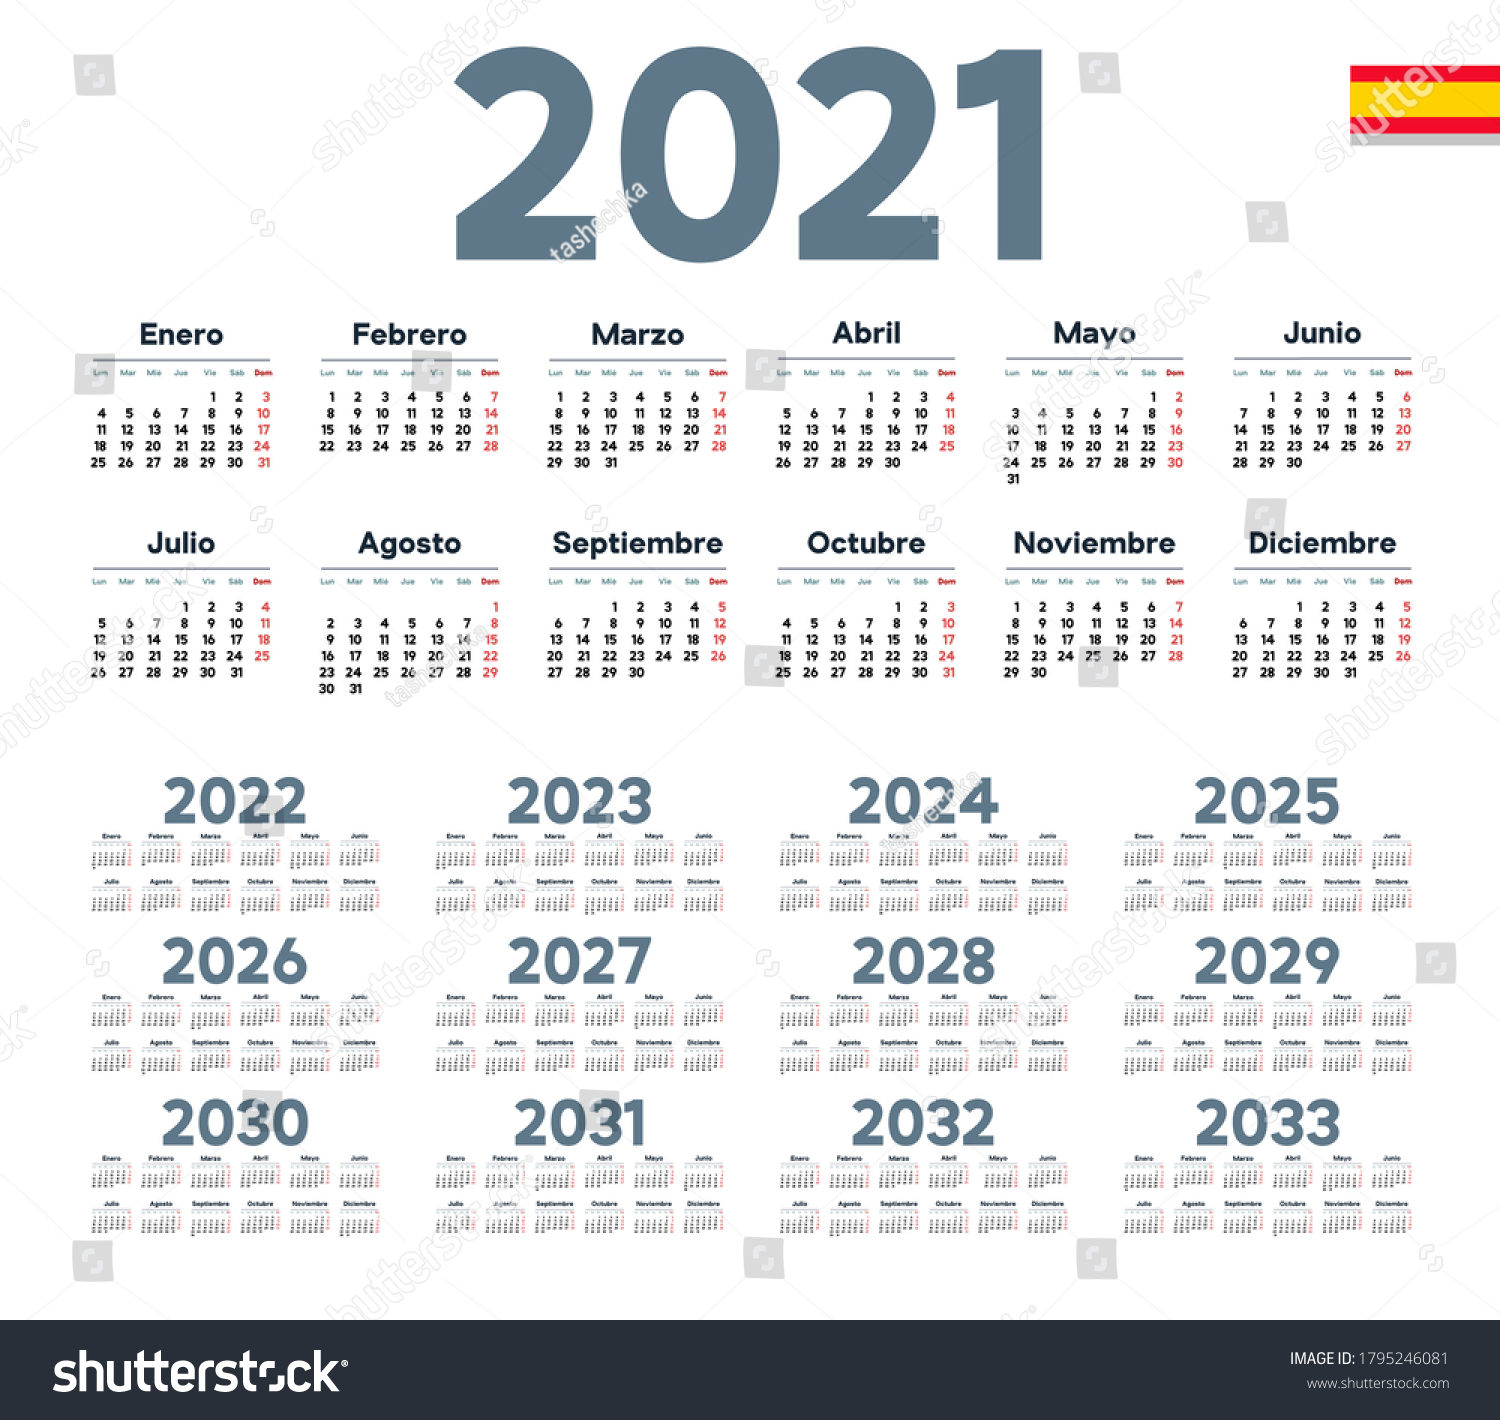 Spanish Calendar 2021 2033 On White Stock Vector (Royalty Free) 1795246081